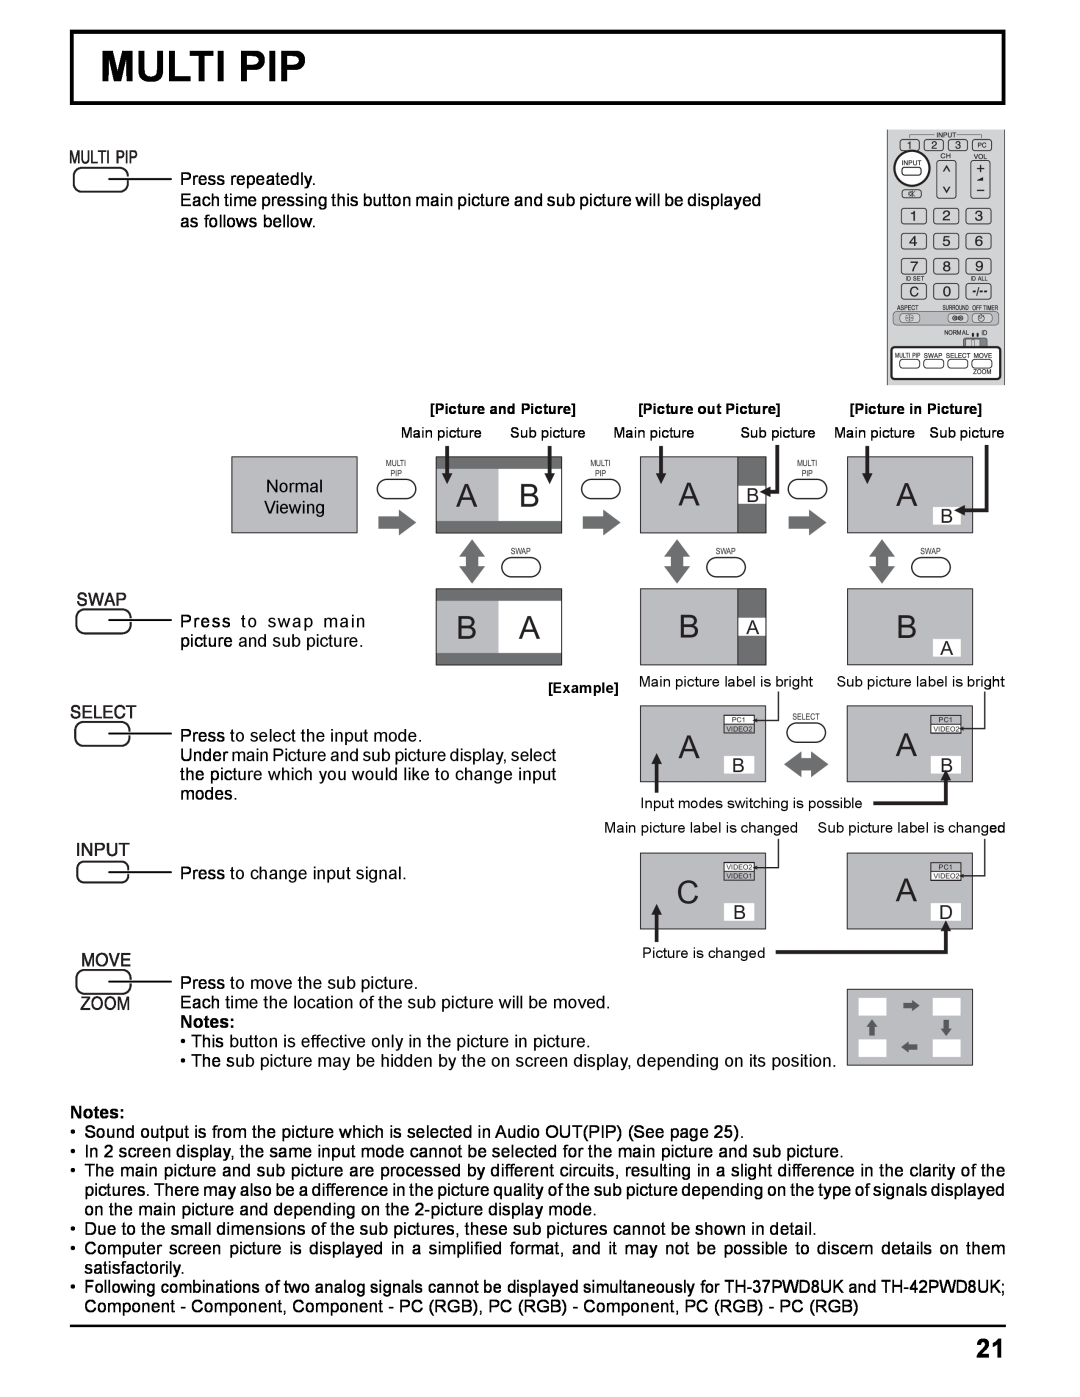 Panasonic TH-50PHD8UK, TH-37PWD8UK, TH-37PHD8UK, TH-42PWD8UK, TH-42PHD8UK manual Multi Pip, Press to change input signal 